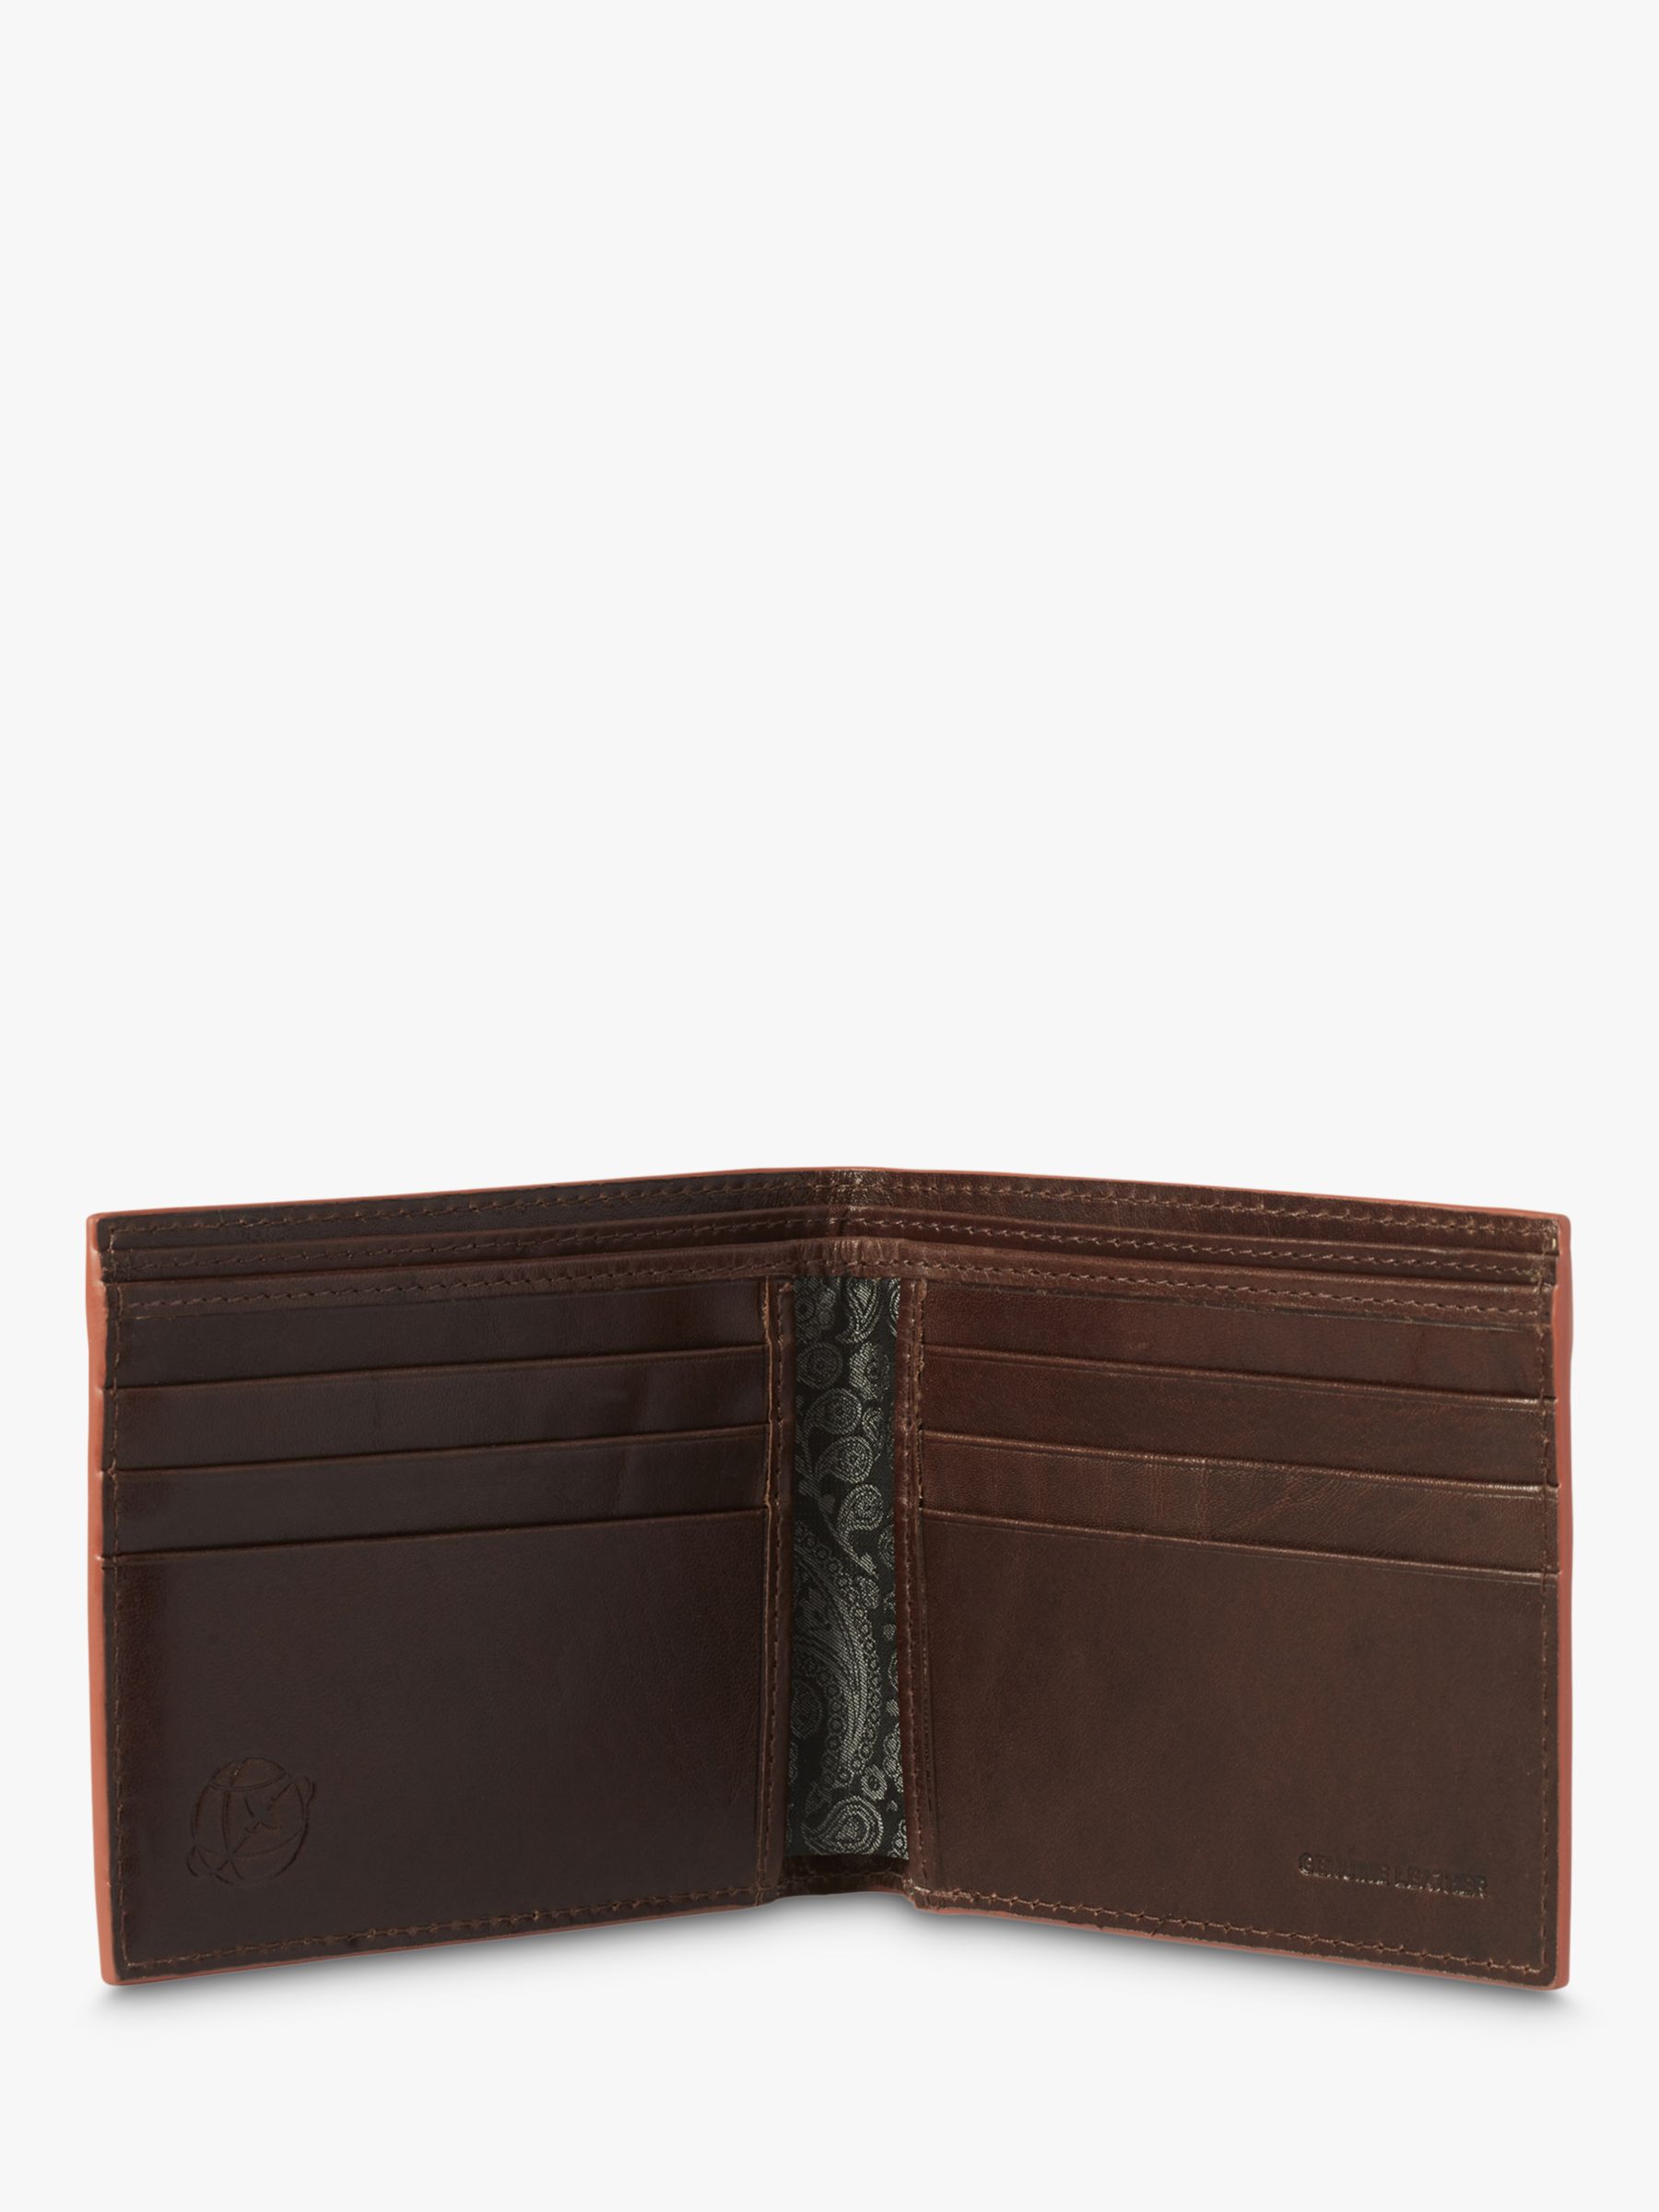 Buy Simon Carter Edge Leather Wallet Online at johnlewis.com